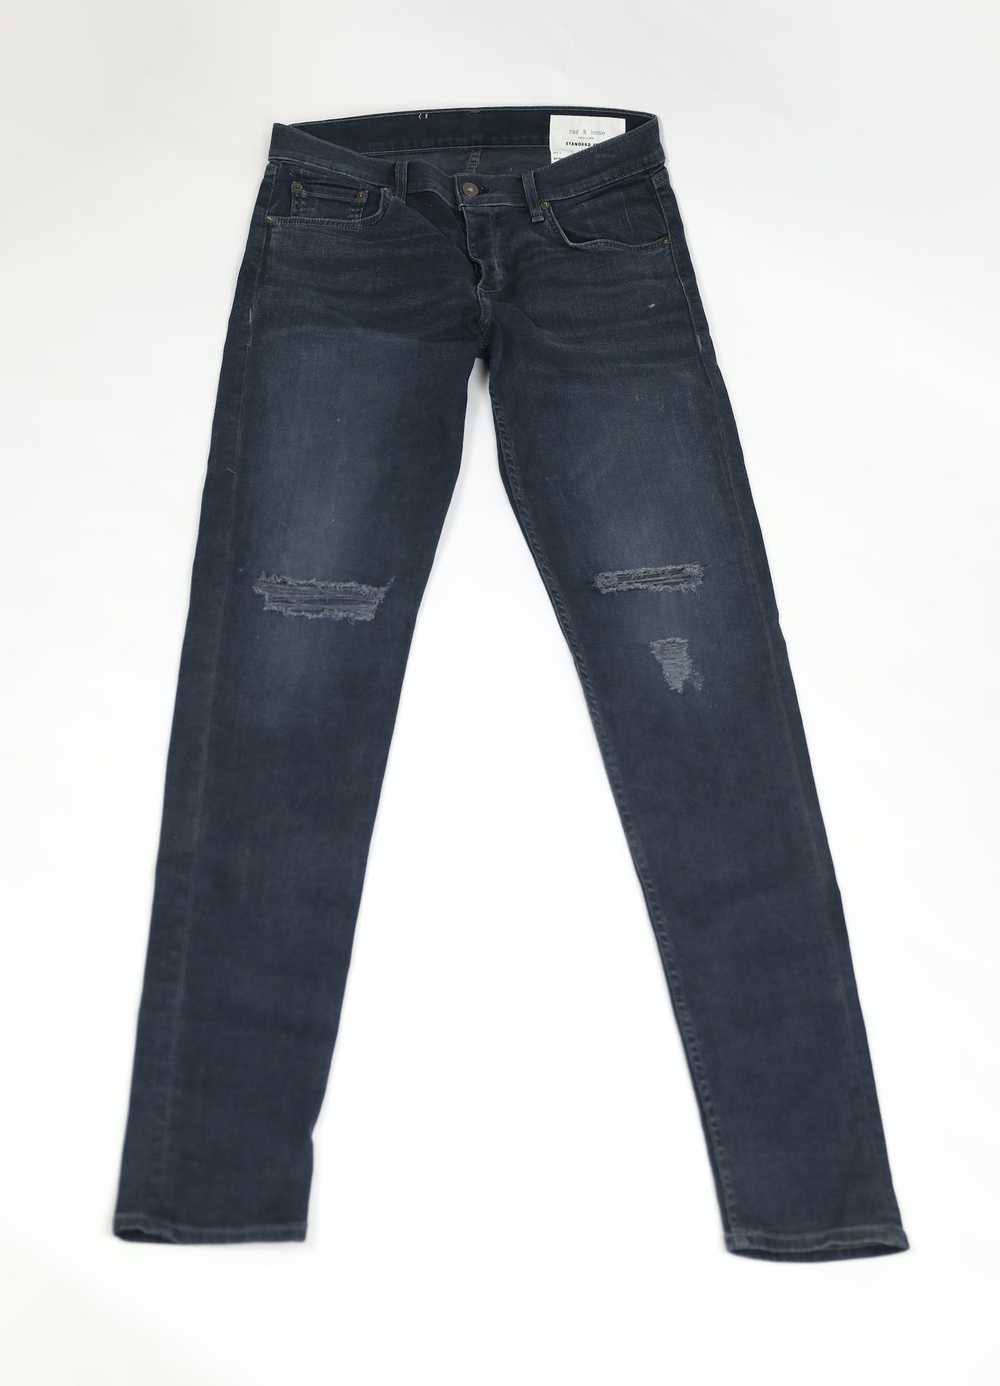 Rag & Bone Standard Issue Fit 1 Skinny Leg Jeans - image 1